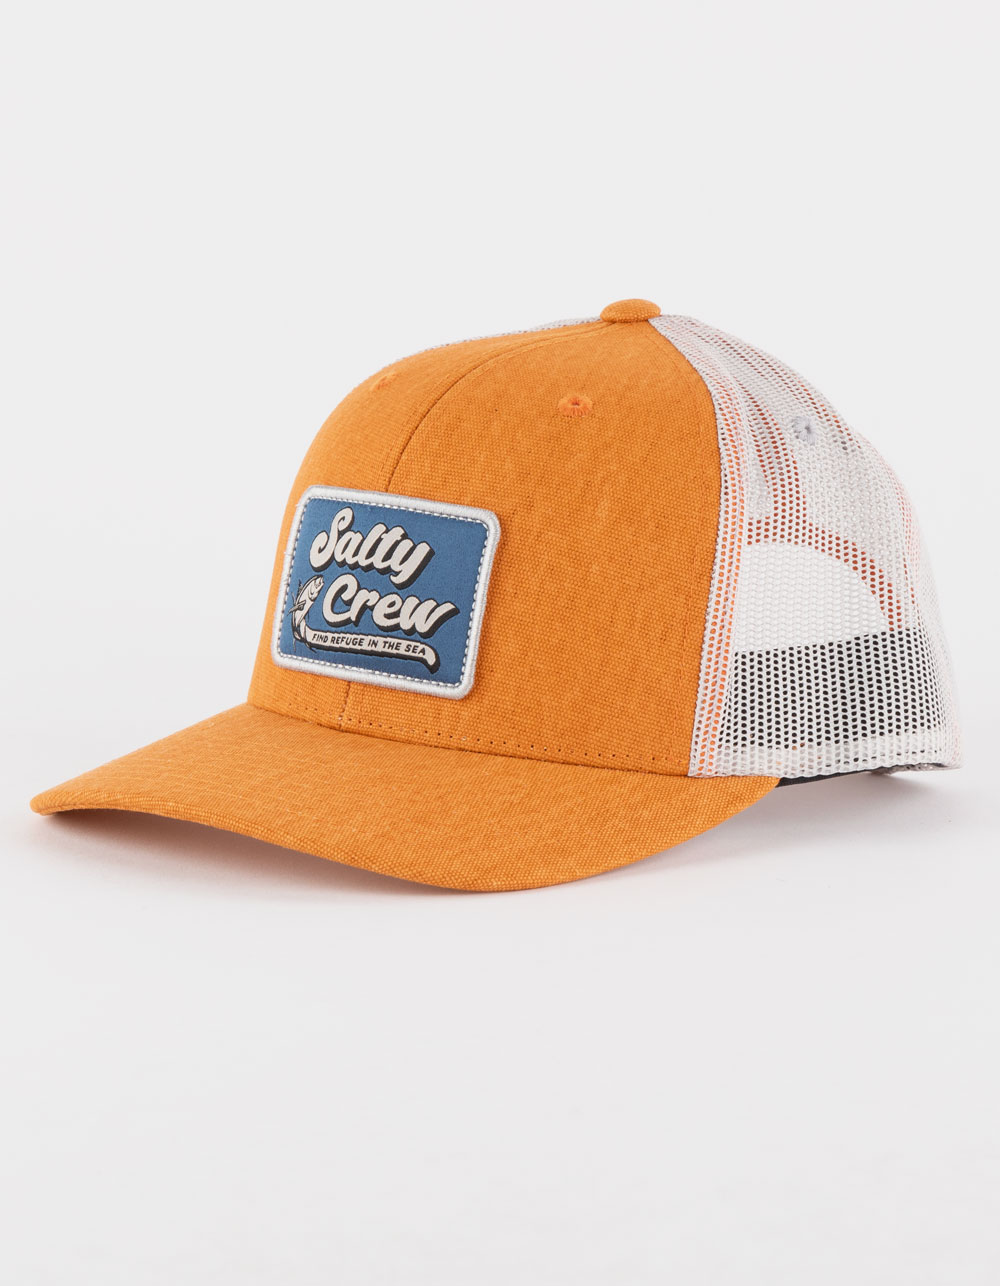 SALTY CREW Retro Catch Retro Mens Trucker Hat - ORANGE | Tillys